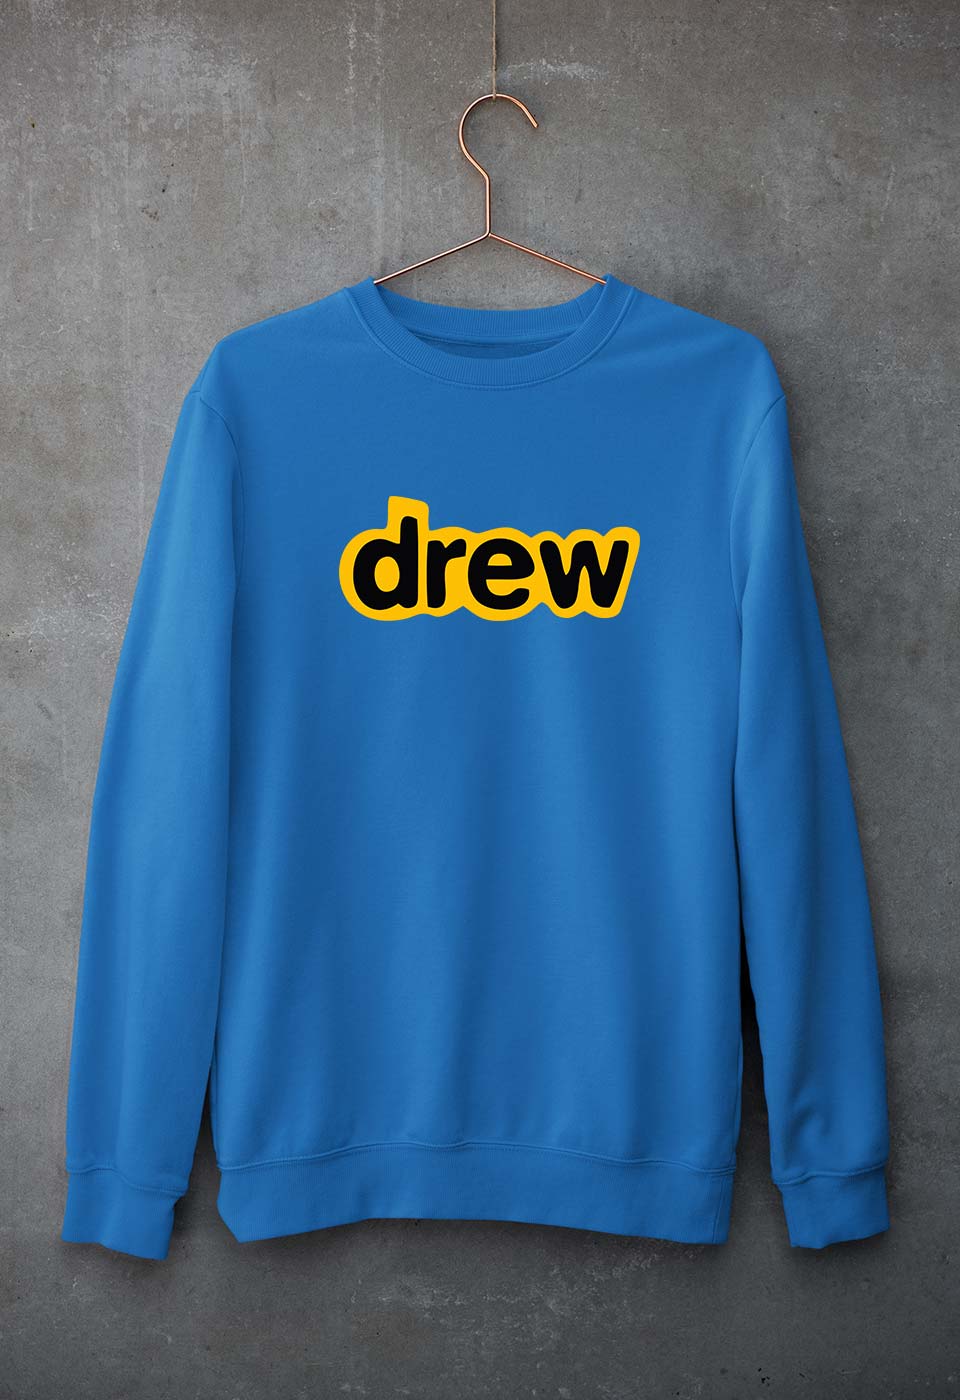 Drew Unisex Sweatshirt for Men/Women-S(40 Inches/101.6 CM)-Royal Blue-Ektarfa.co.in